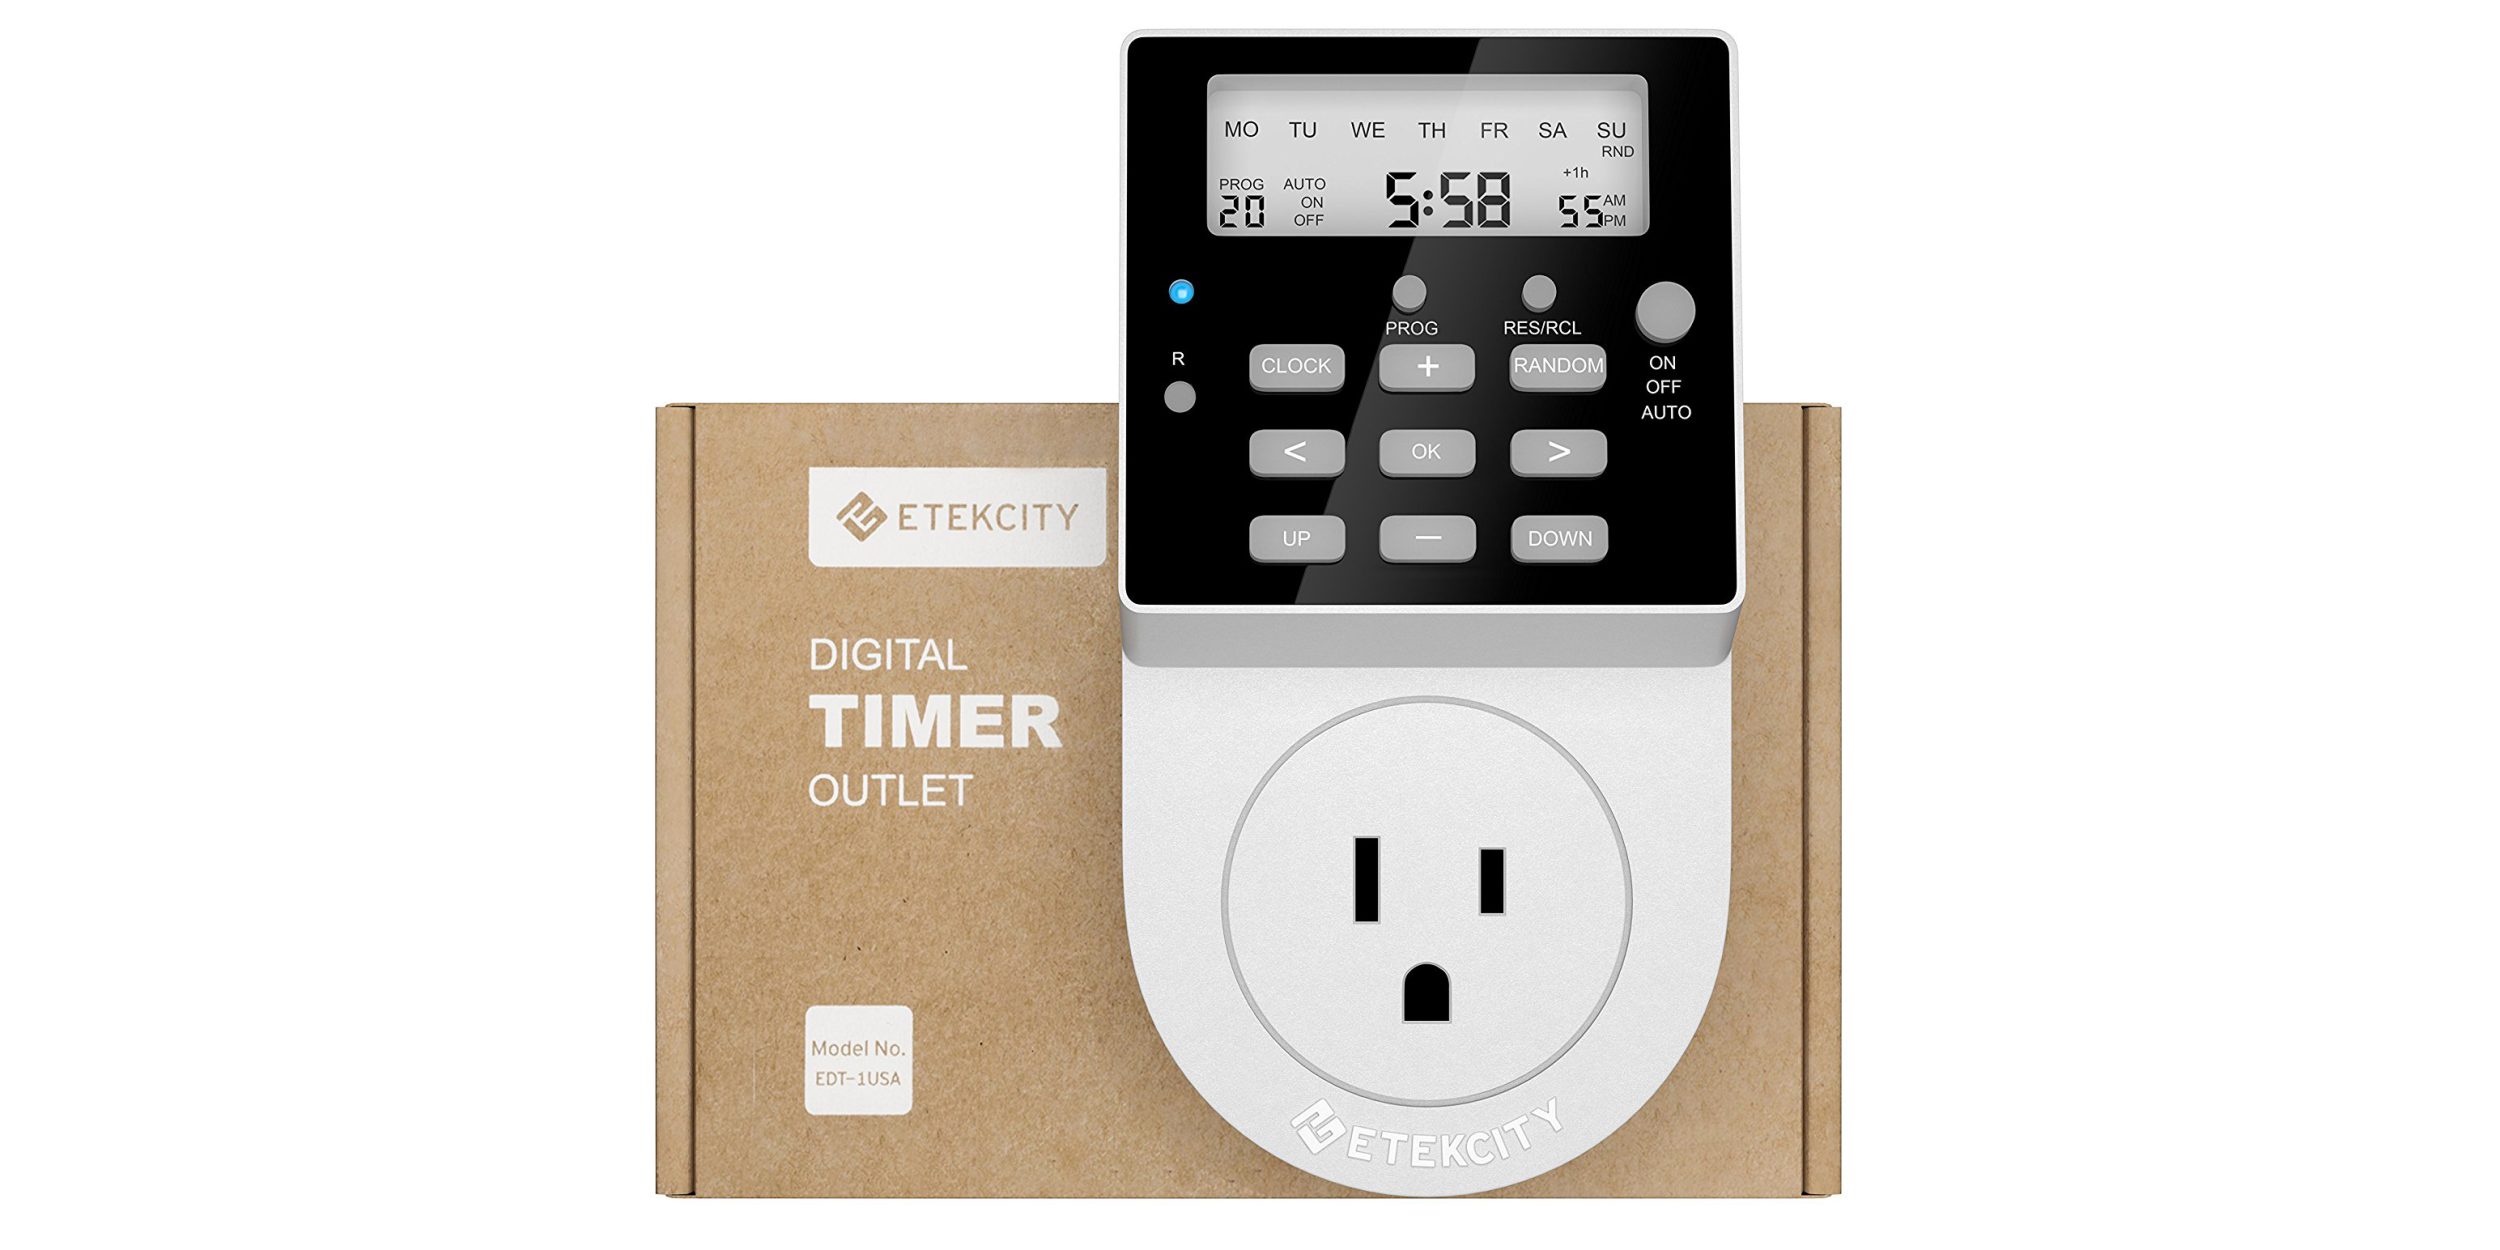 Etekcity Smart Plug Review: Affordable Energy Monitoring with Alexa